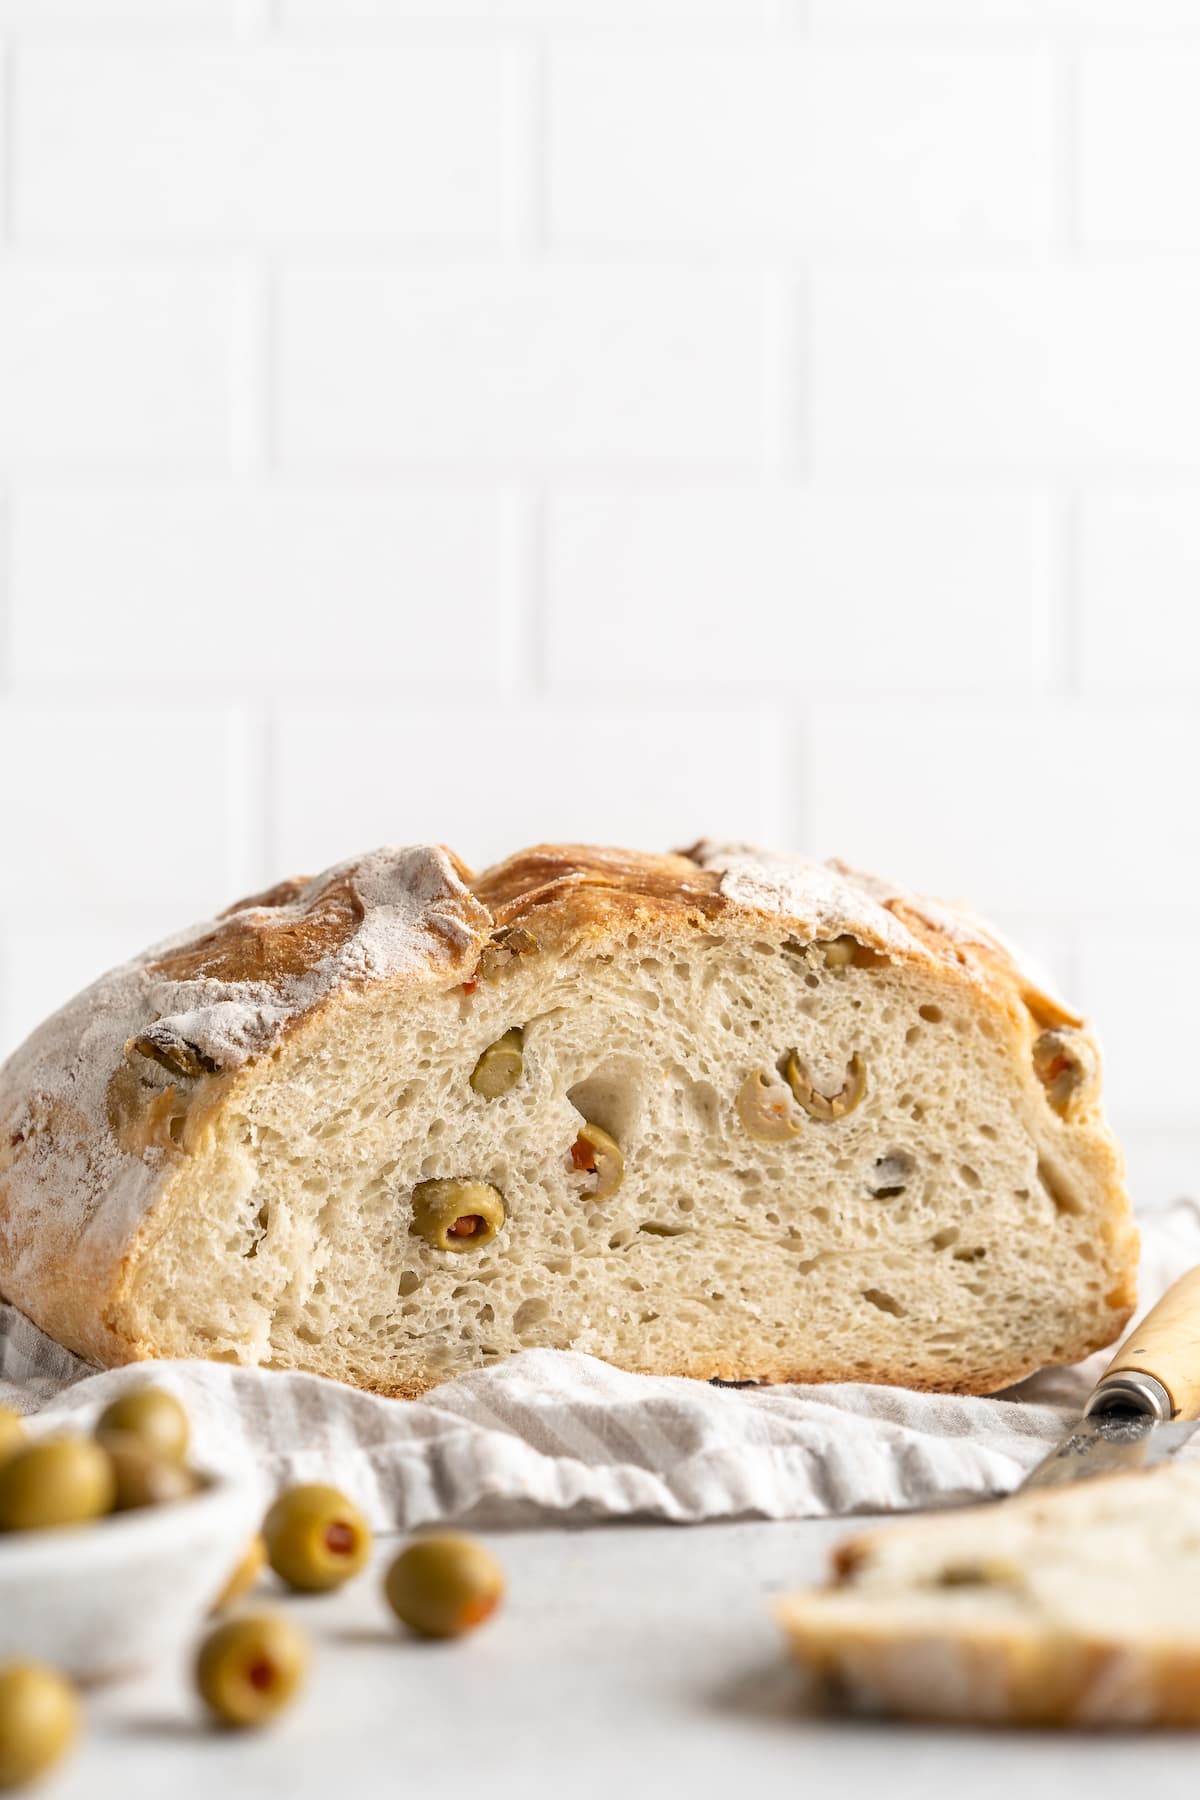 Cut olive bread loaf, showing interior